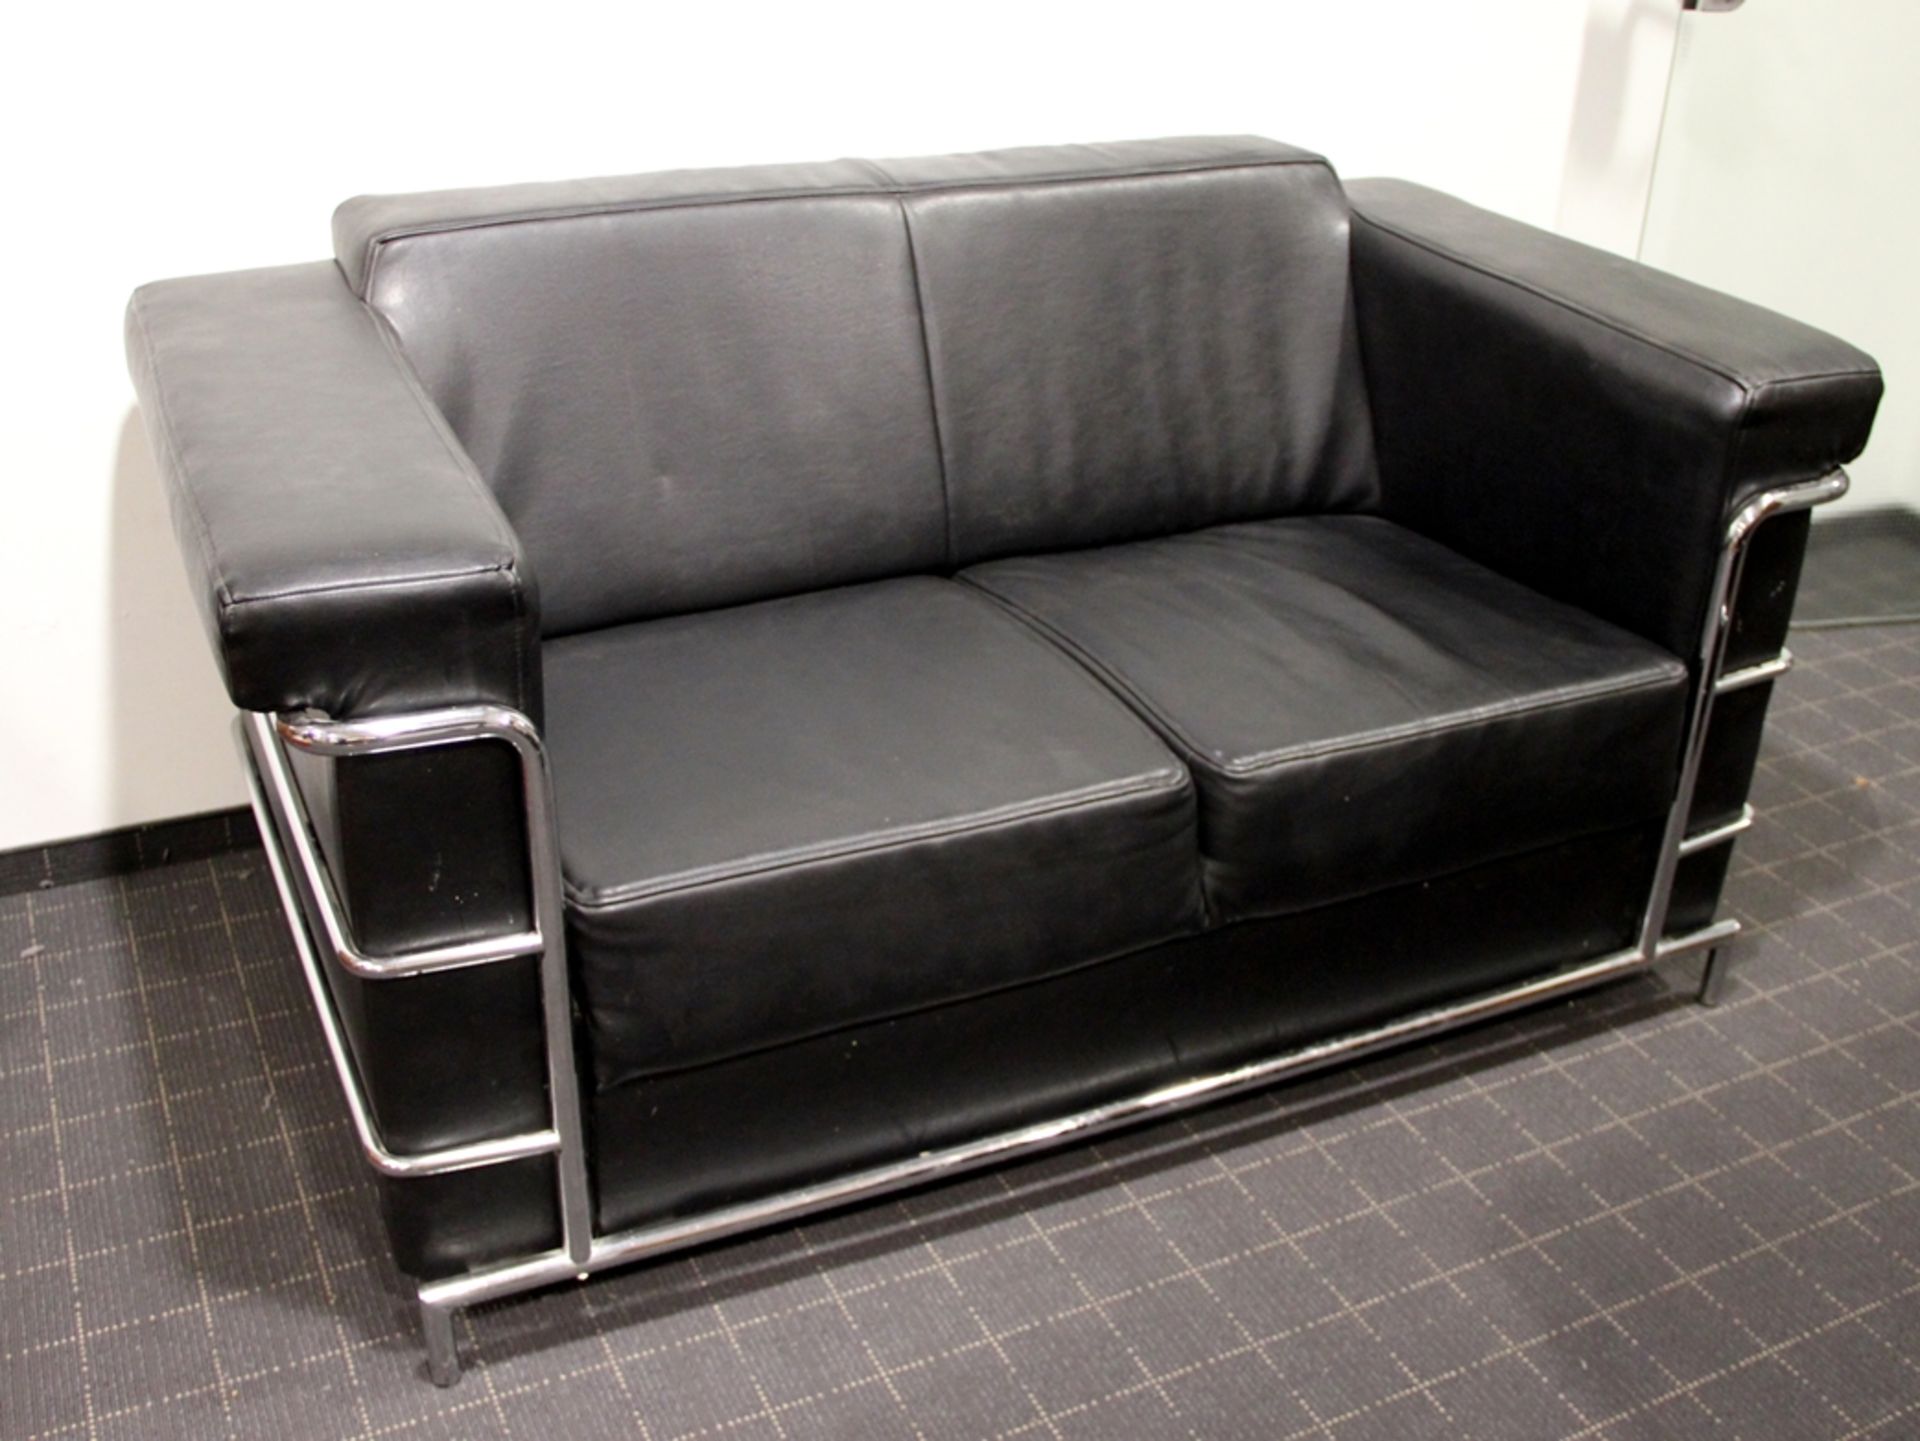 Desinger-Sofa - Image 2 of 4